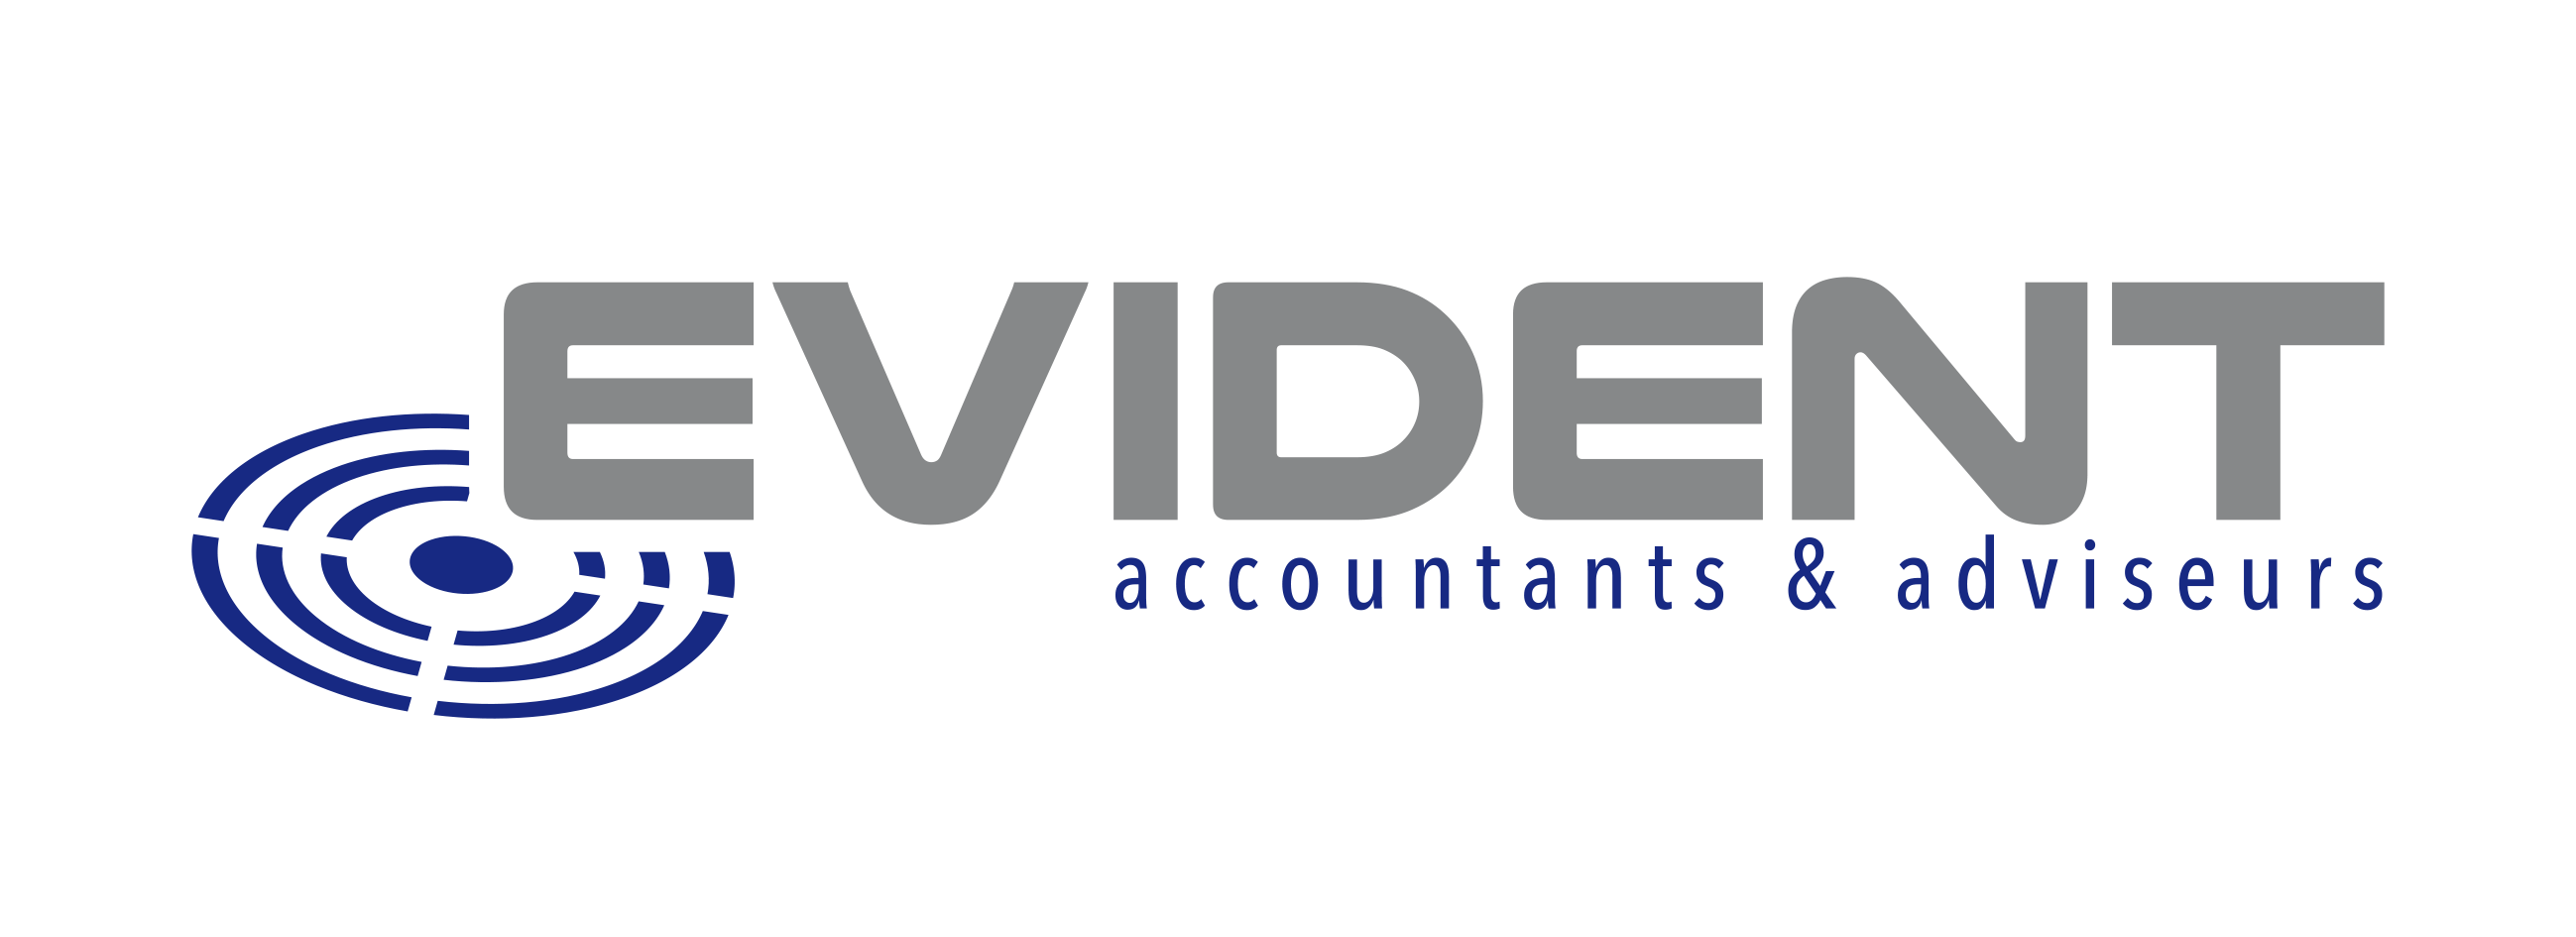 Evident Accountants & Adviseurs